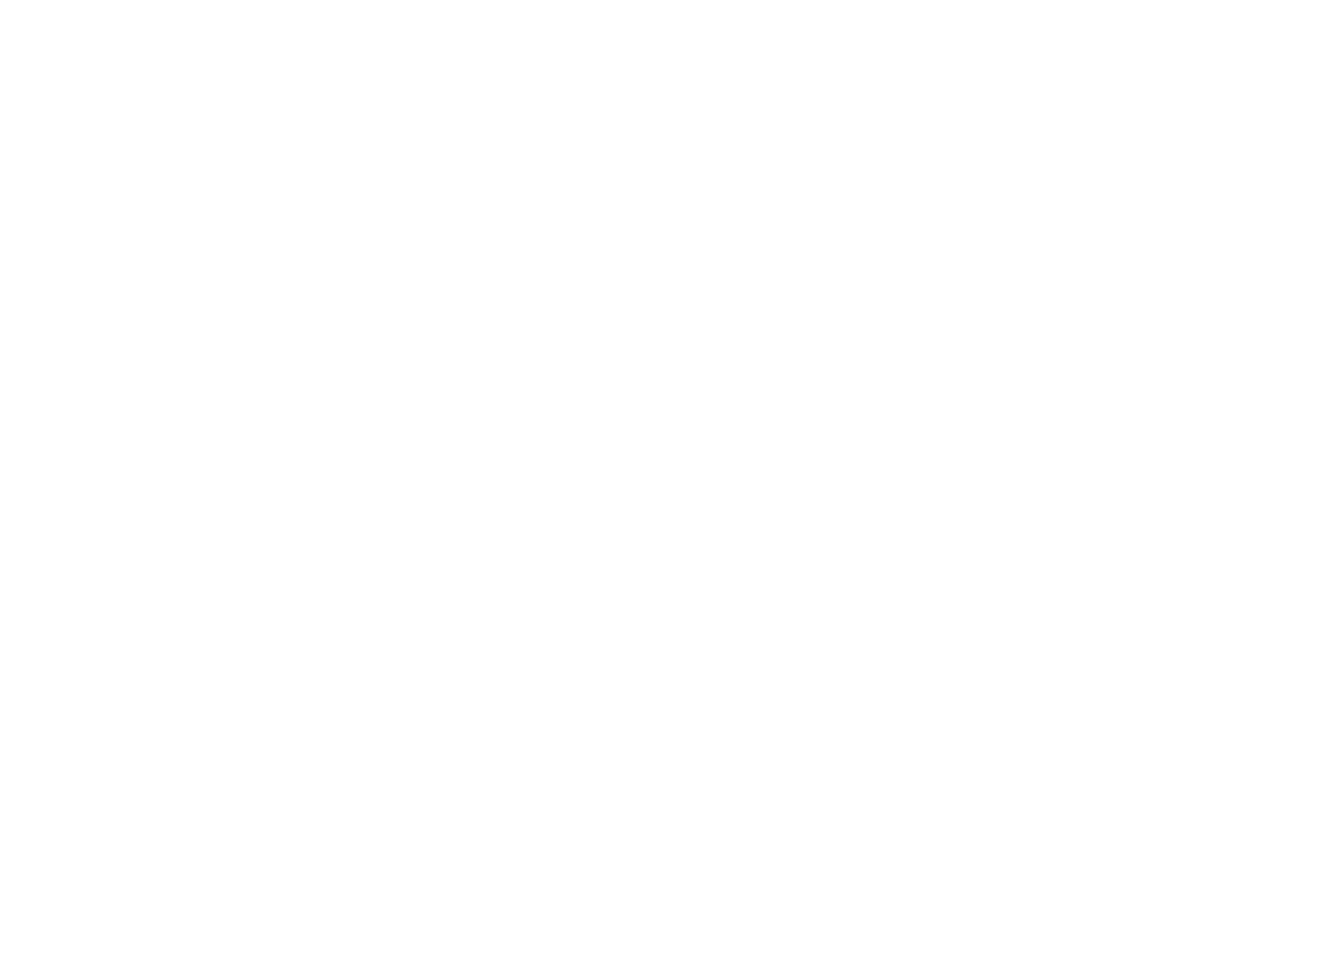 Peter Lindbergh untold stories a coruna spain. 04.12.2021 - 31.03.2022